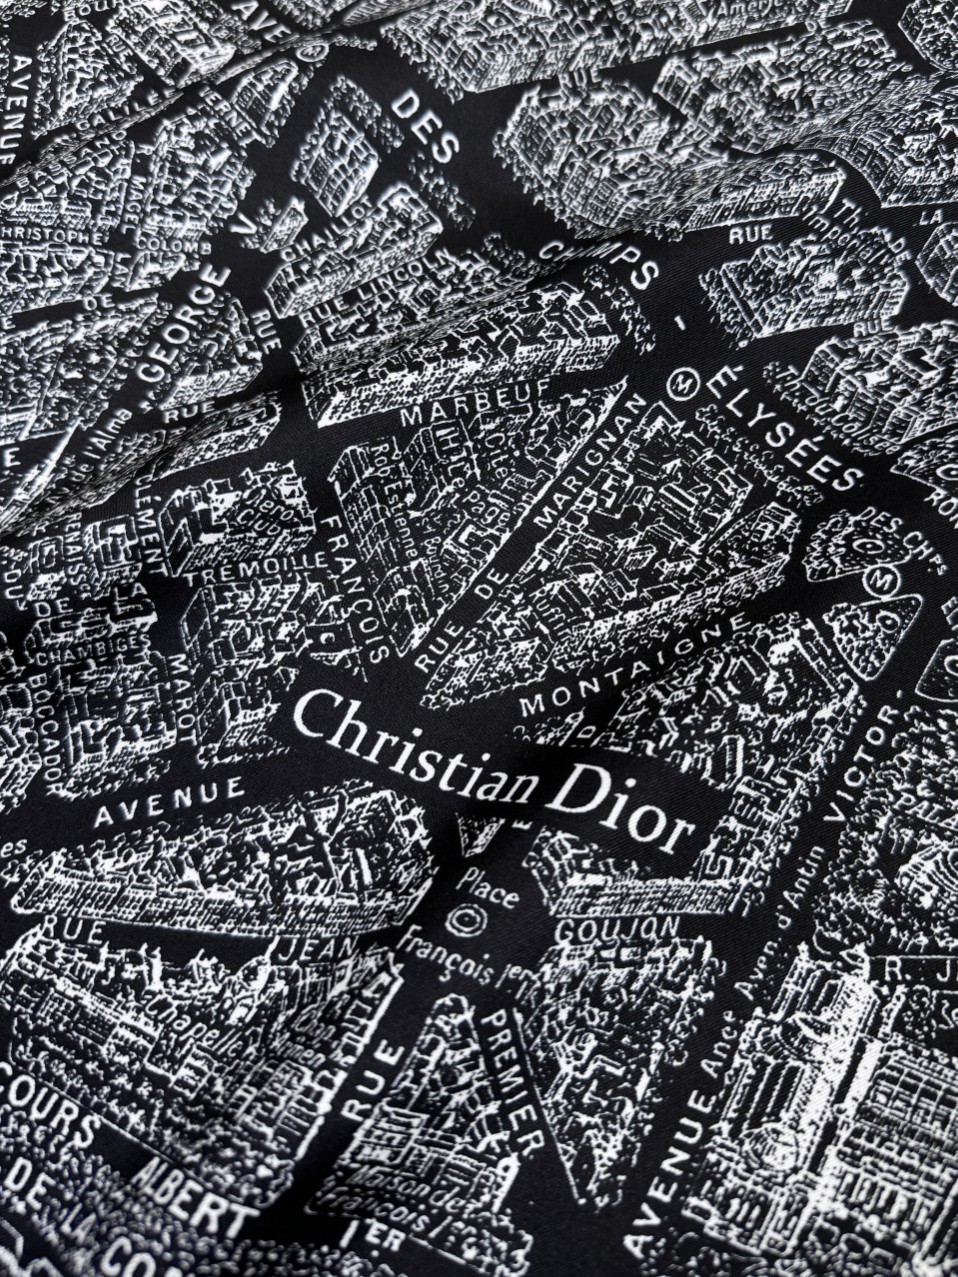 DIOR 巴黎地图 C D标志提花条形图案丝巾